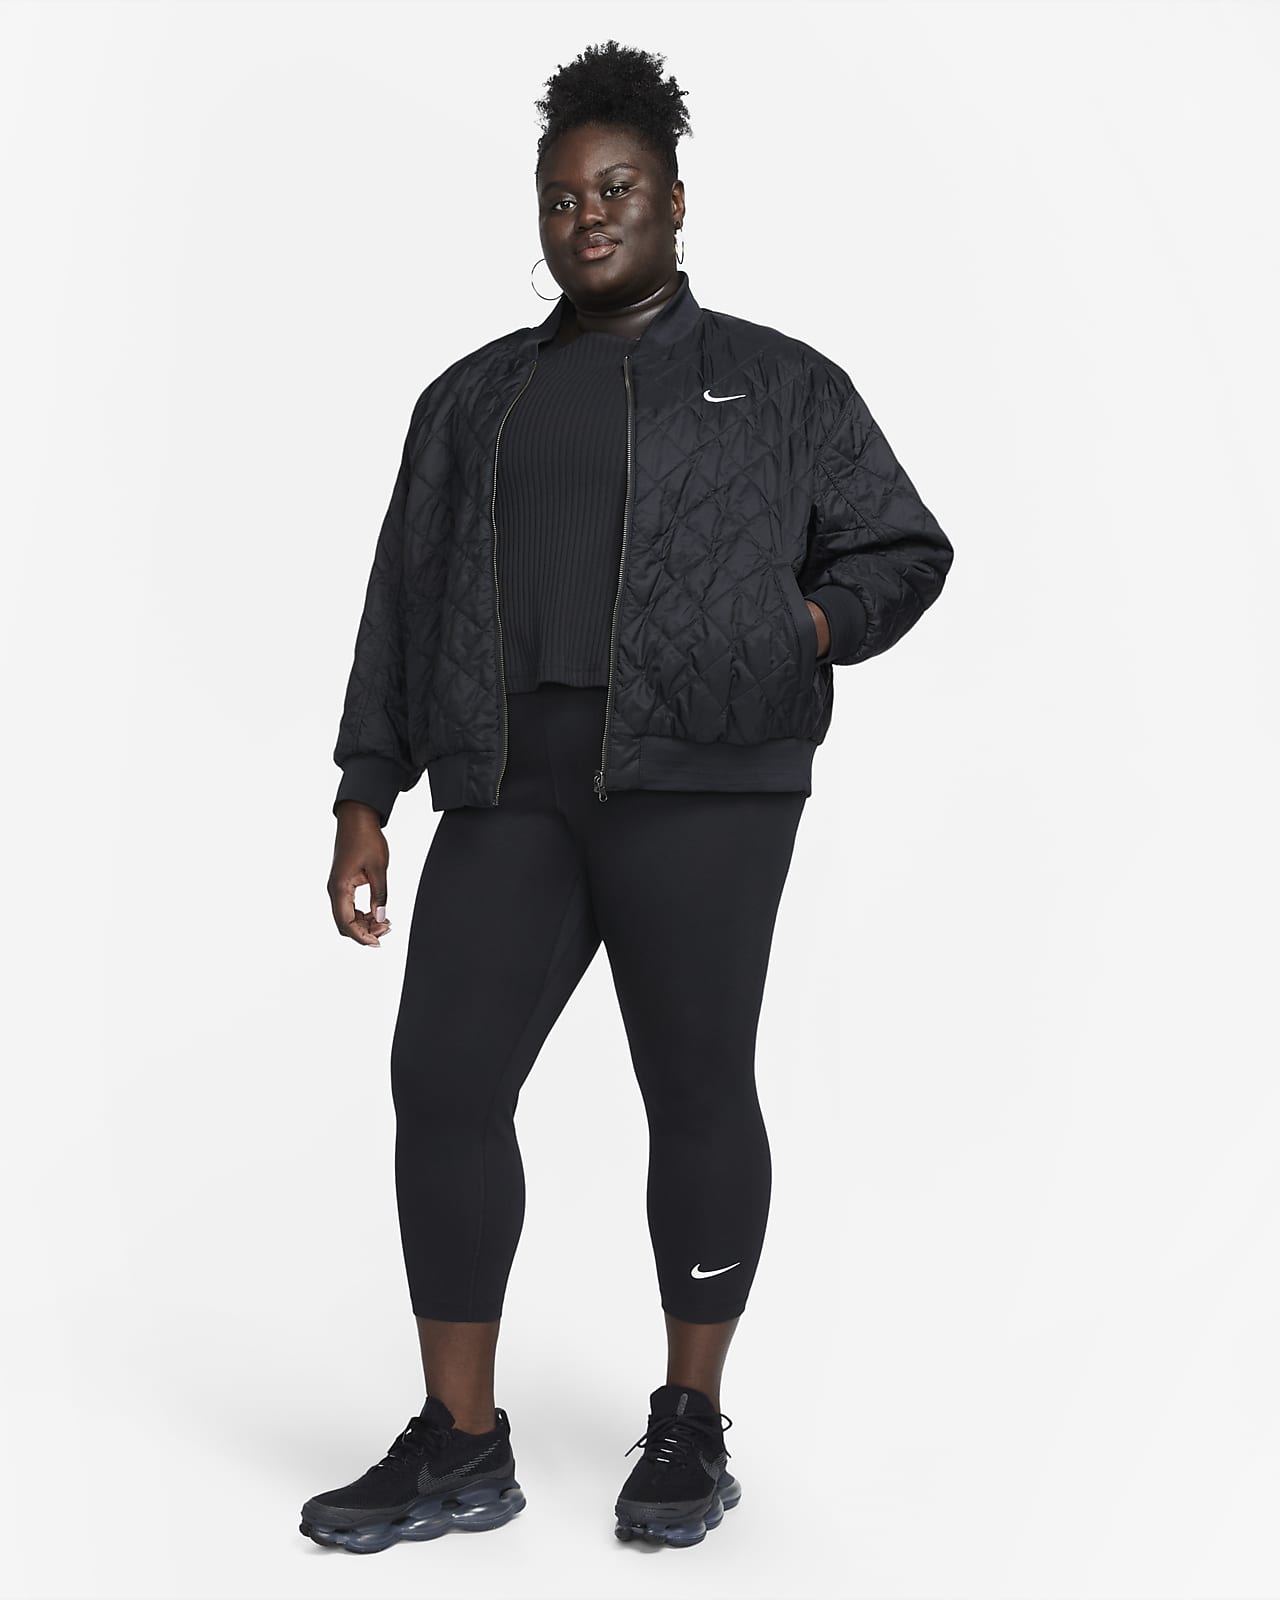 Legging 7/8 taille haute Nike Sportswear Classic pour femme (grande taille)